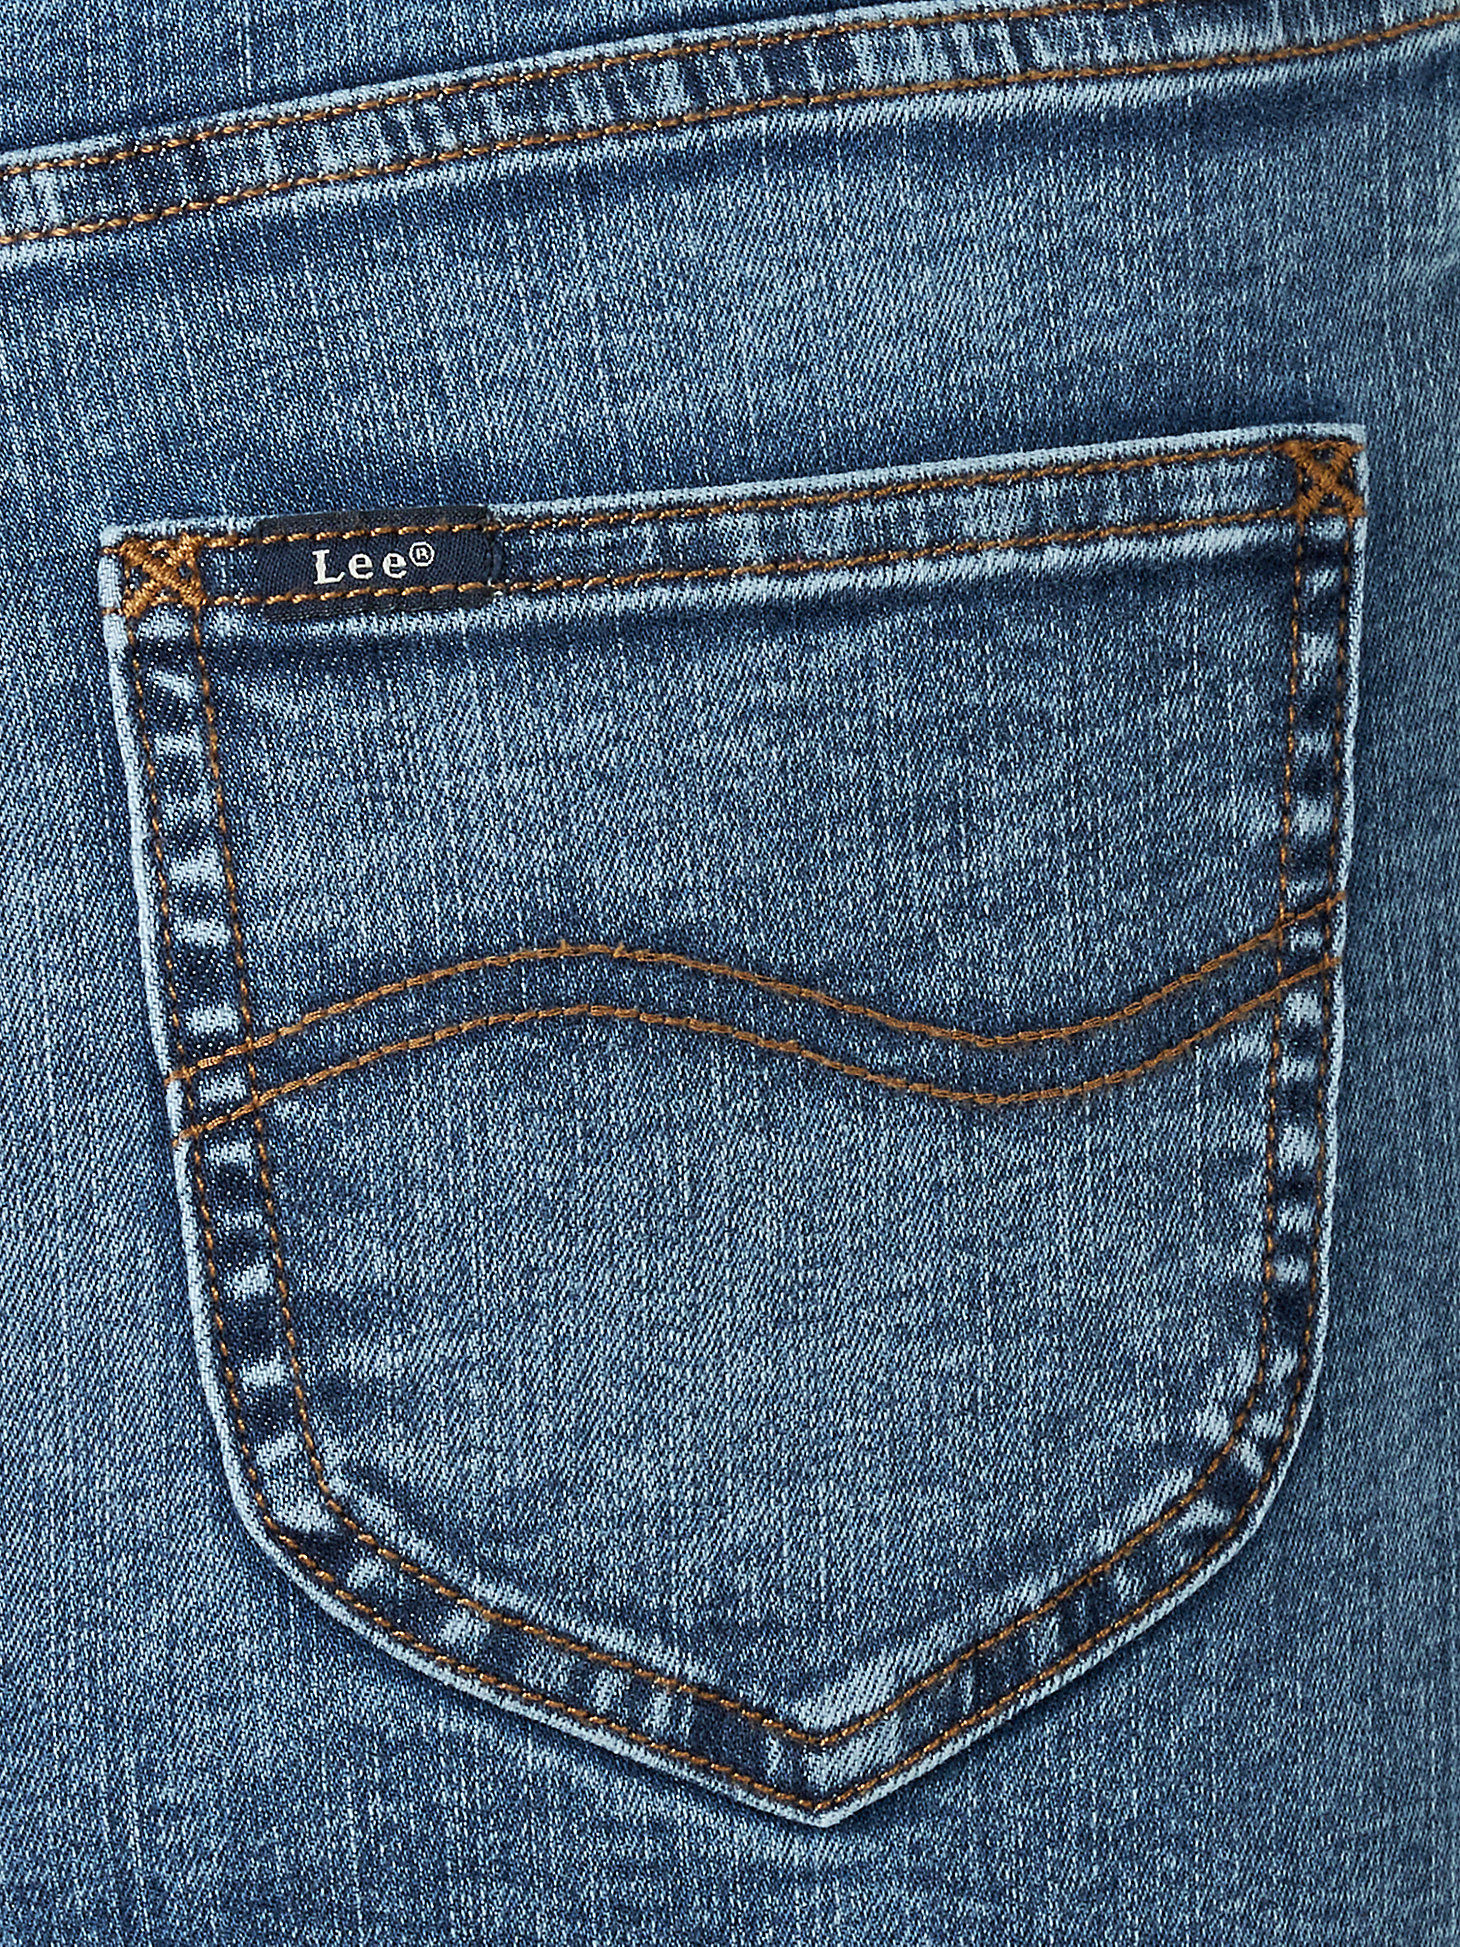 Women's High Rise Slim Fit Skinny Button-Fly Jean in Seattle alternative view 6